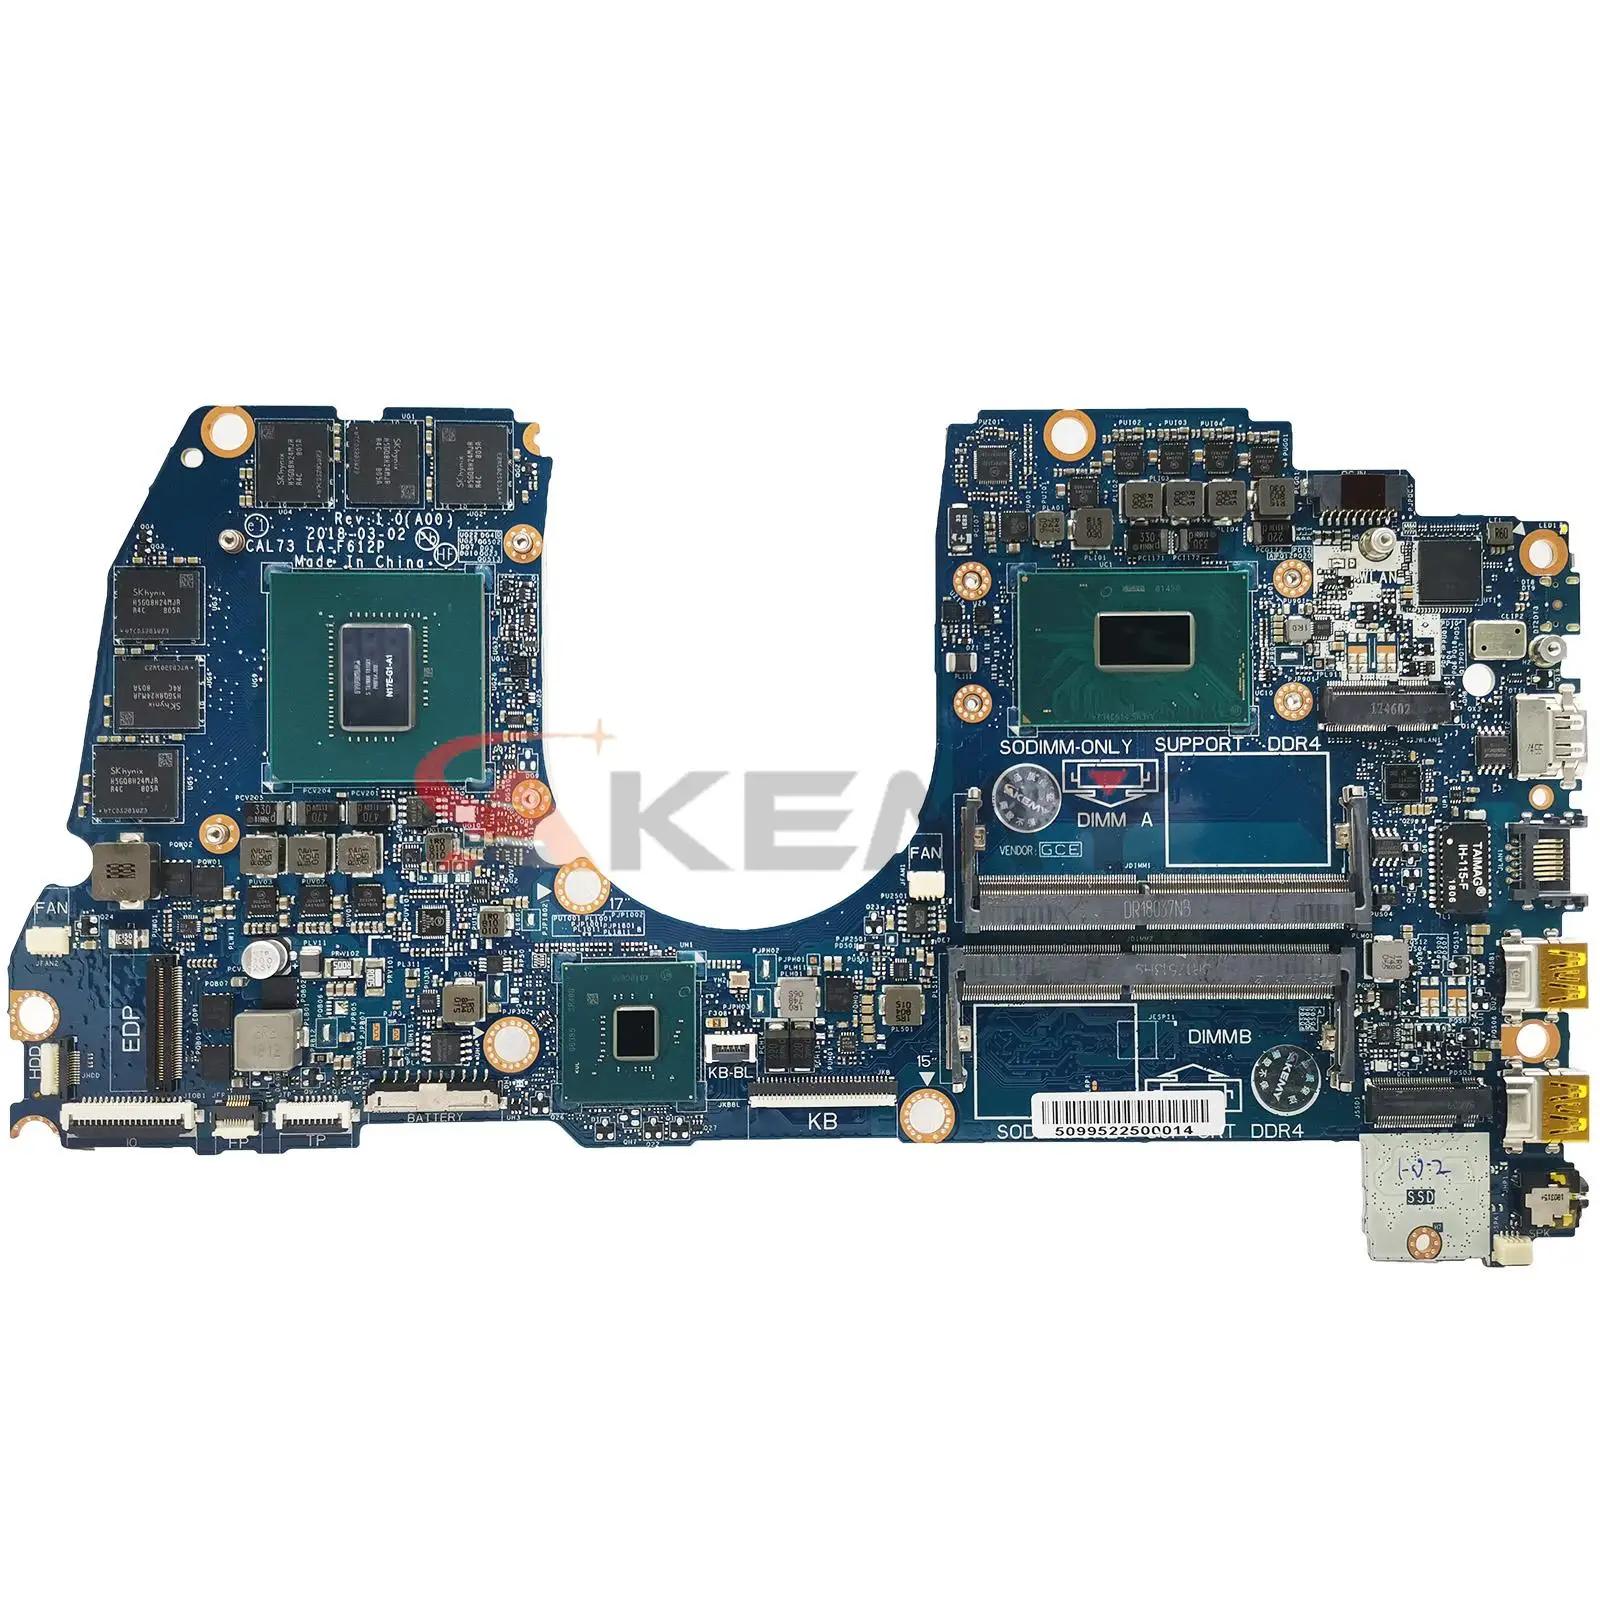 

CAL73 LA-F612P For Dell Inspiron G3 17-3779 15-3579 Notebook Mainboard CN-02K19K 2K19K 08Y3FV GTX1060 6G Laptop Motherboard